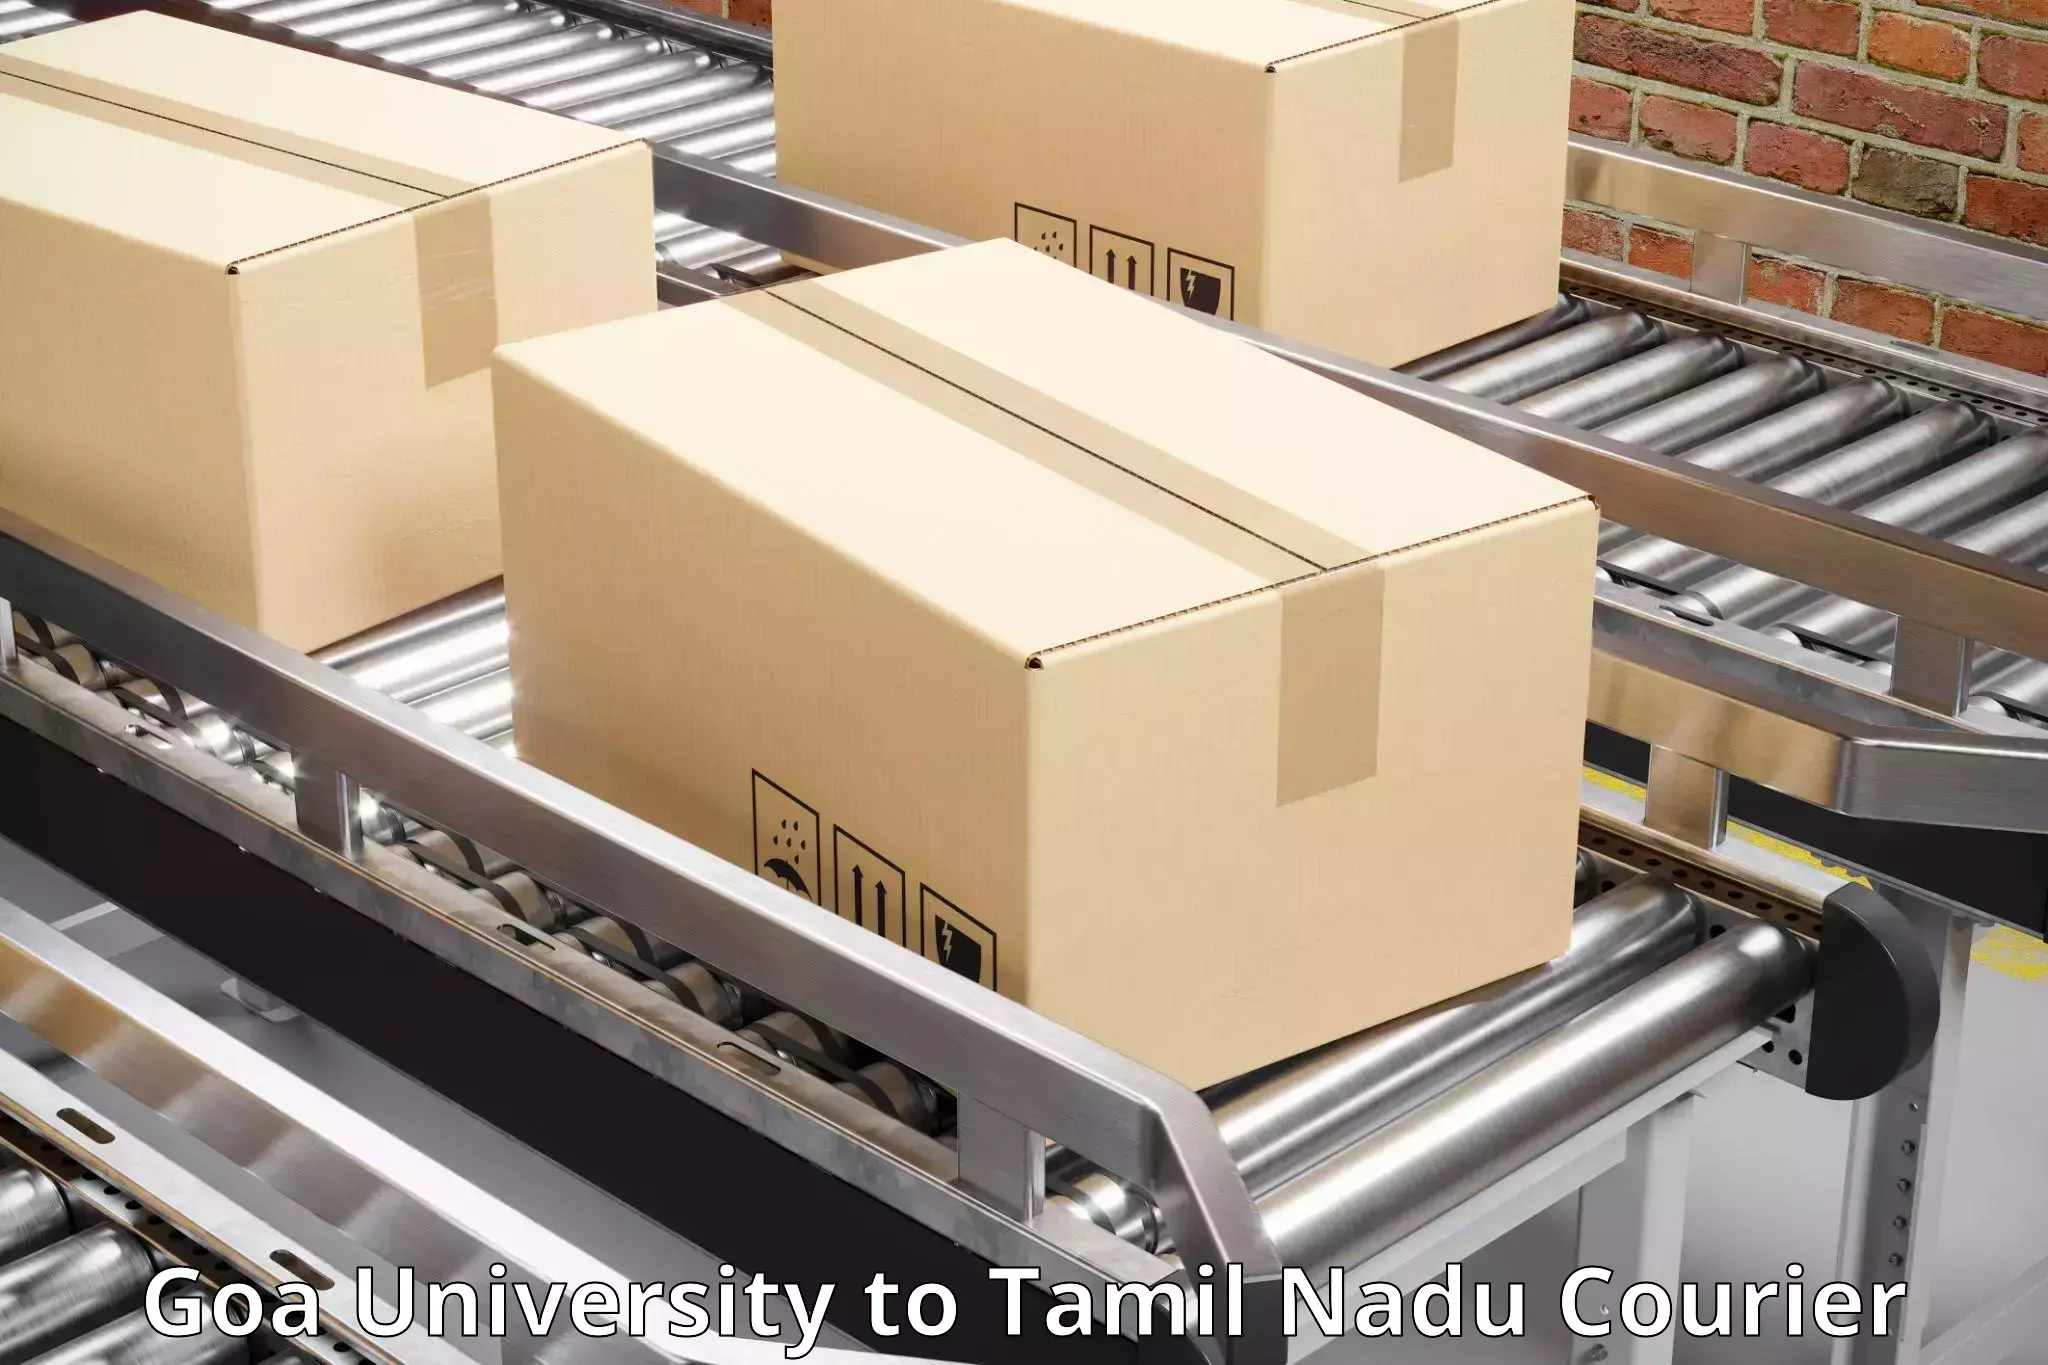 Smart courier technologies in Goa University to Thuraiyur